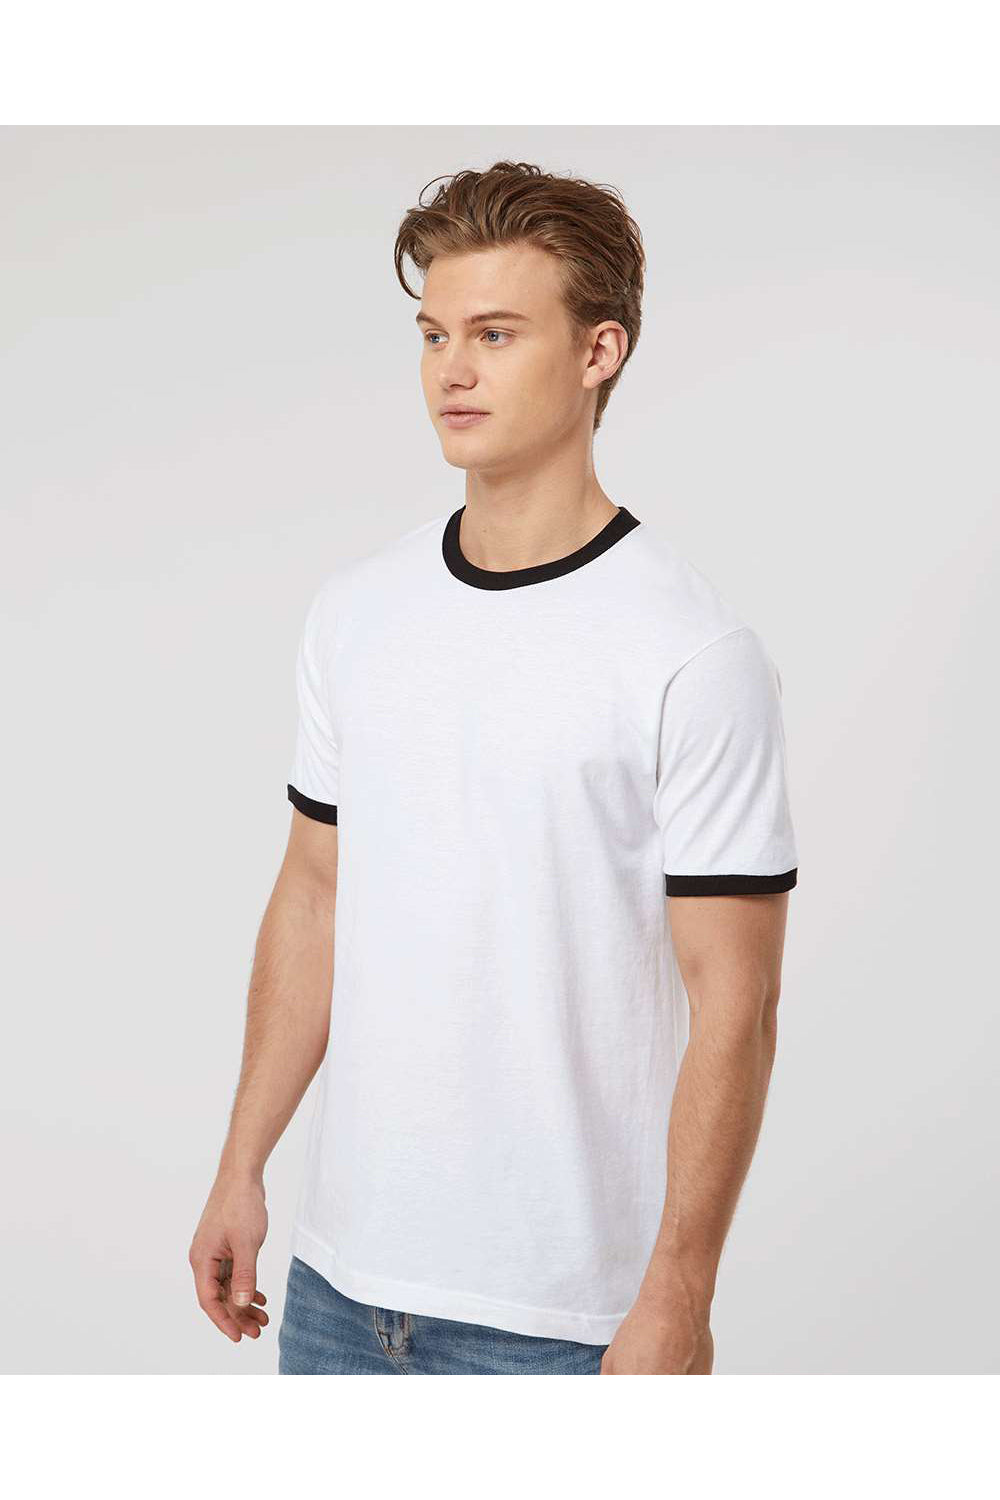 Tultex 246 Mens Fine Jersey Ringer Short Sleeve Crewneck T-Shirt White/Black Model Side